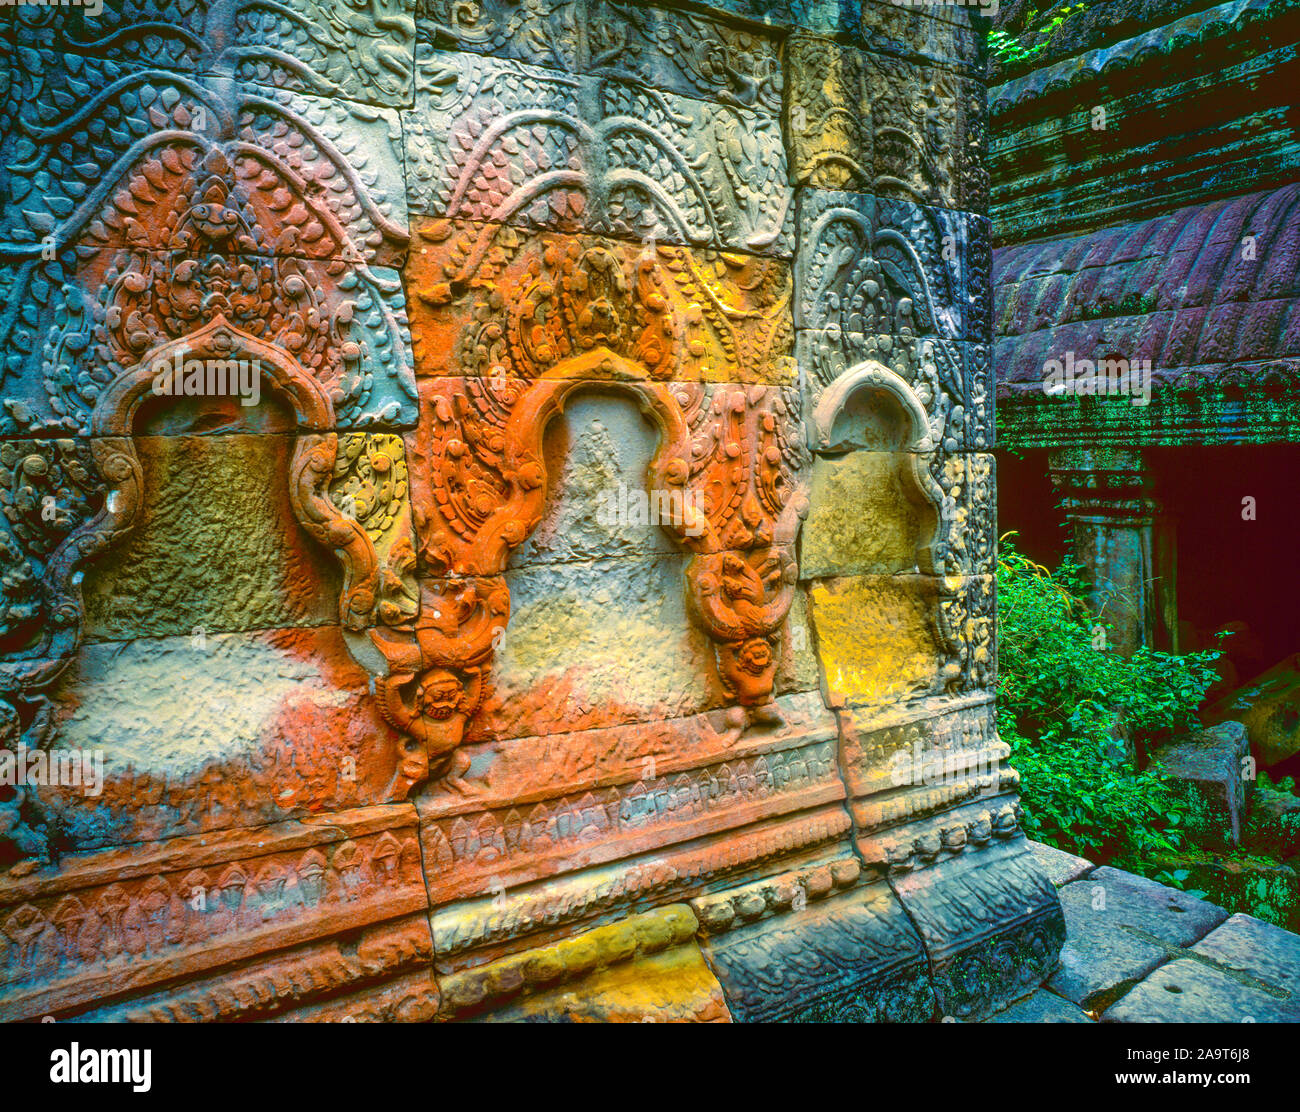 Details bunte Tempel in Angkor Warr Archäologischen Park, Kambodscha, in 1186 gebaut, im unrestaurierten Zustand belassen, Khymer Kultur Ruinen in Südostasien j Stockfoto